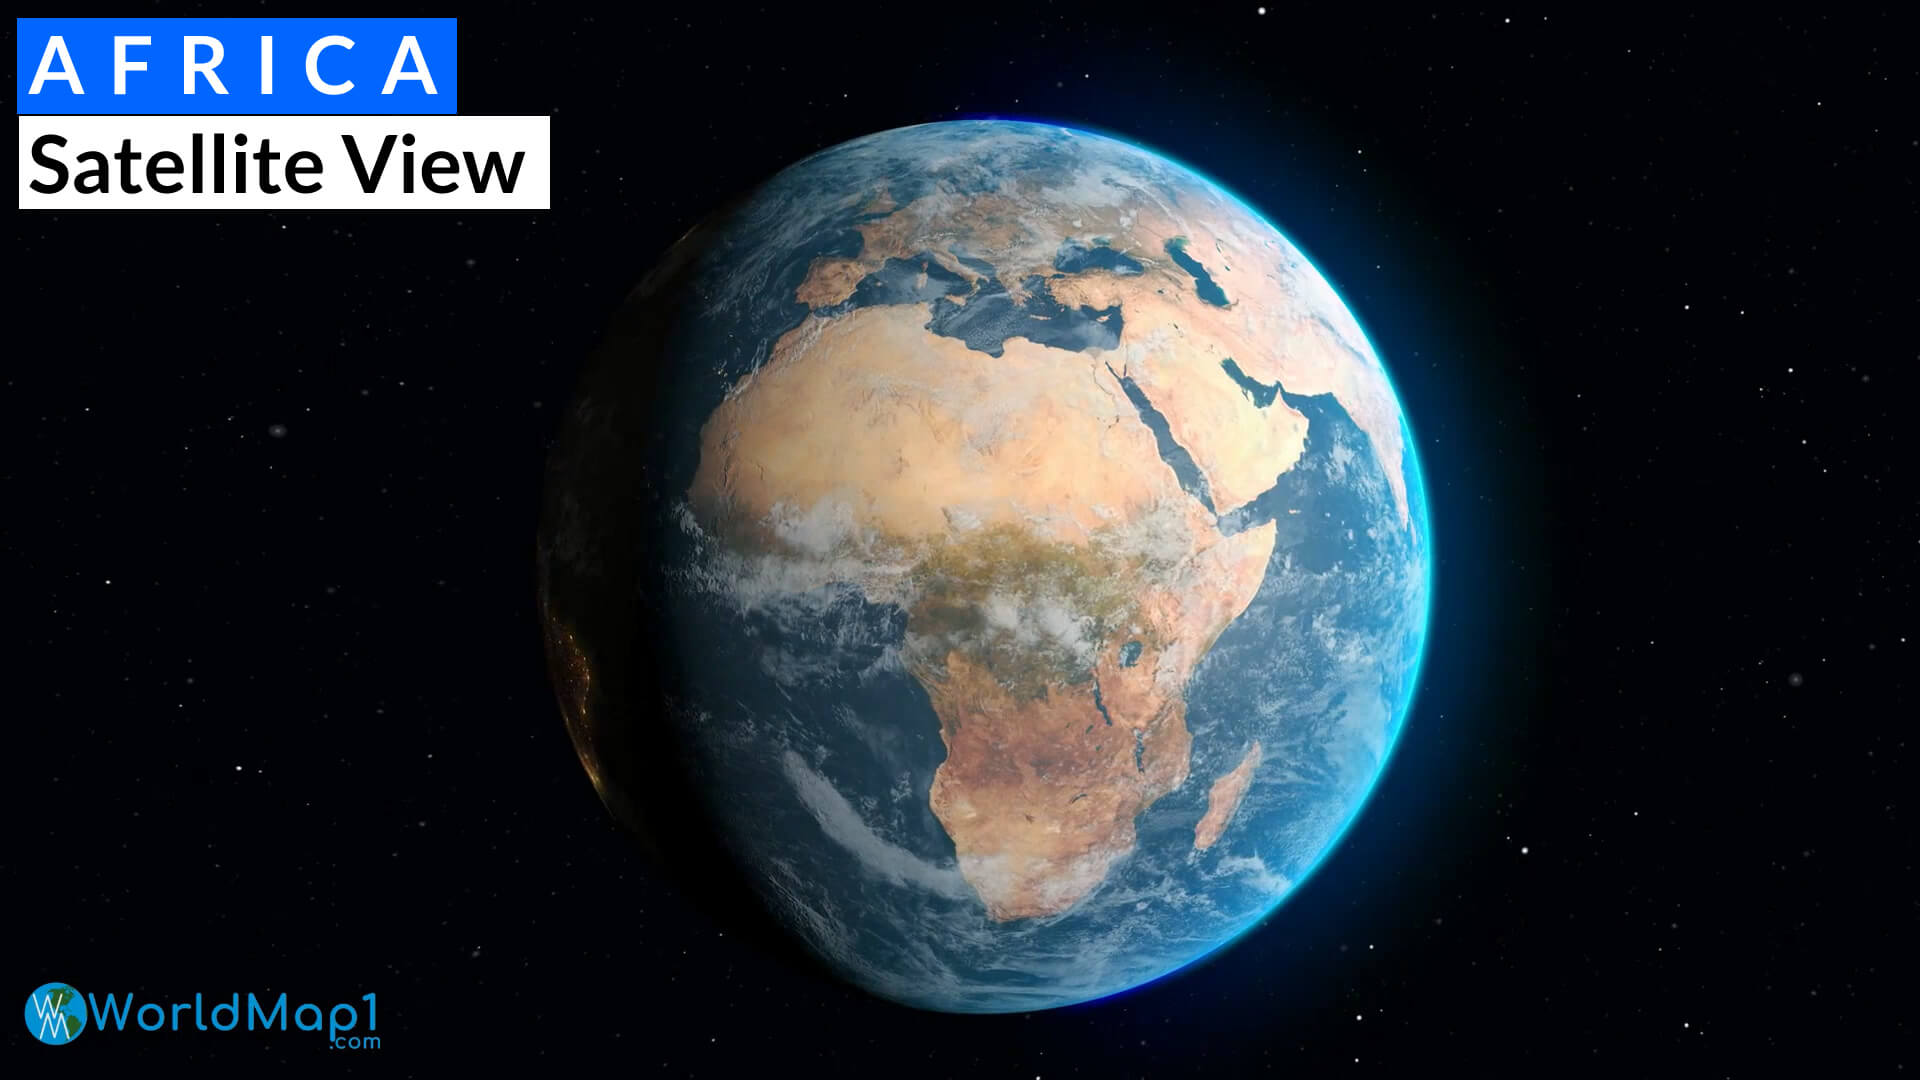 Africa Satellite View